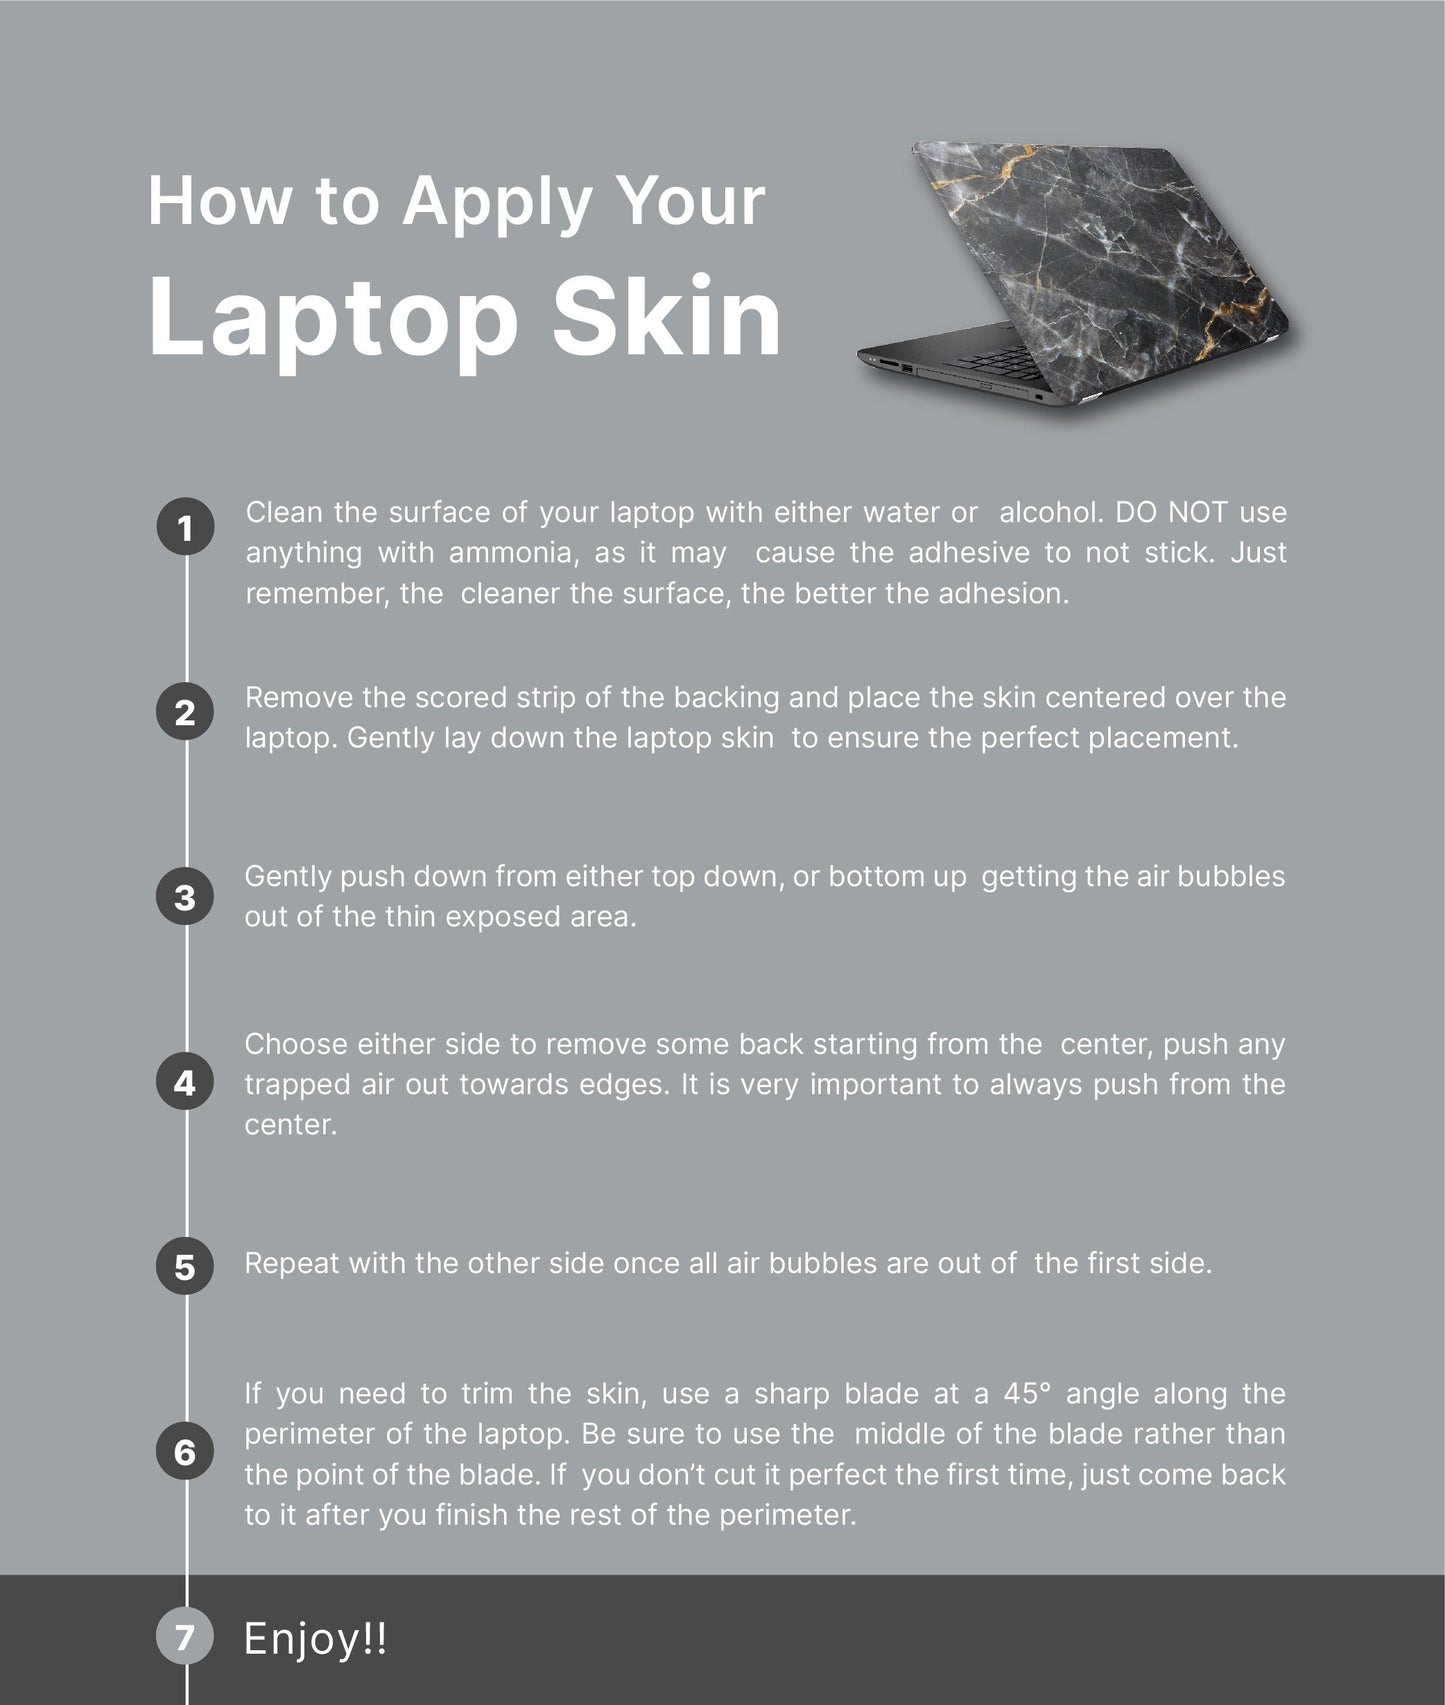 Lemon Floral Laptop Skin, Laptop Cover, Laptop Skins, Removable Laptop Skins, Laptop Decal, Customized Laptop Skin, Laptop Stickers 170